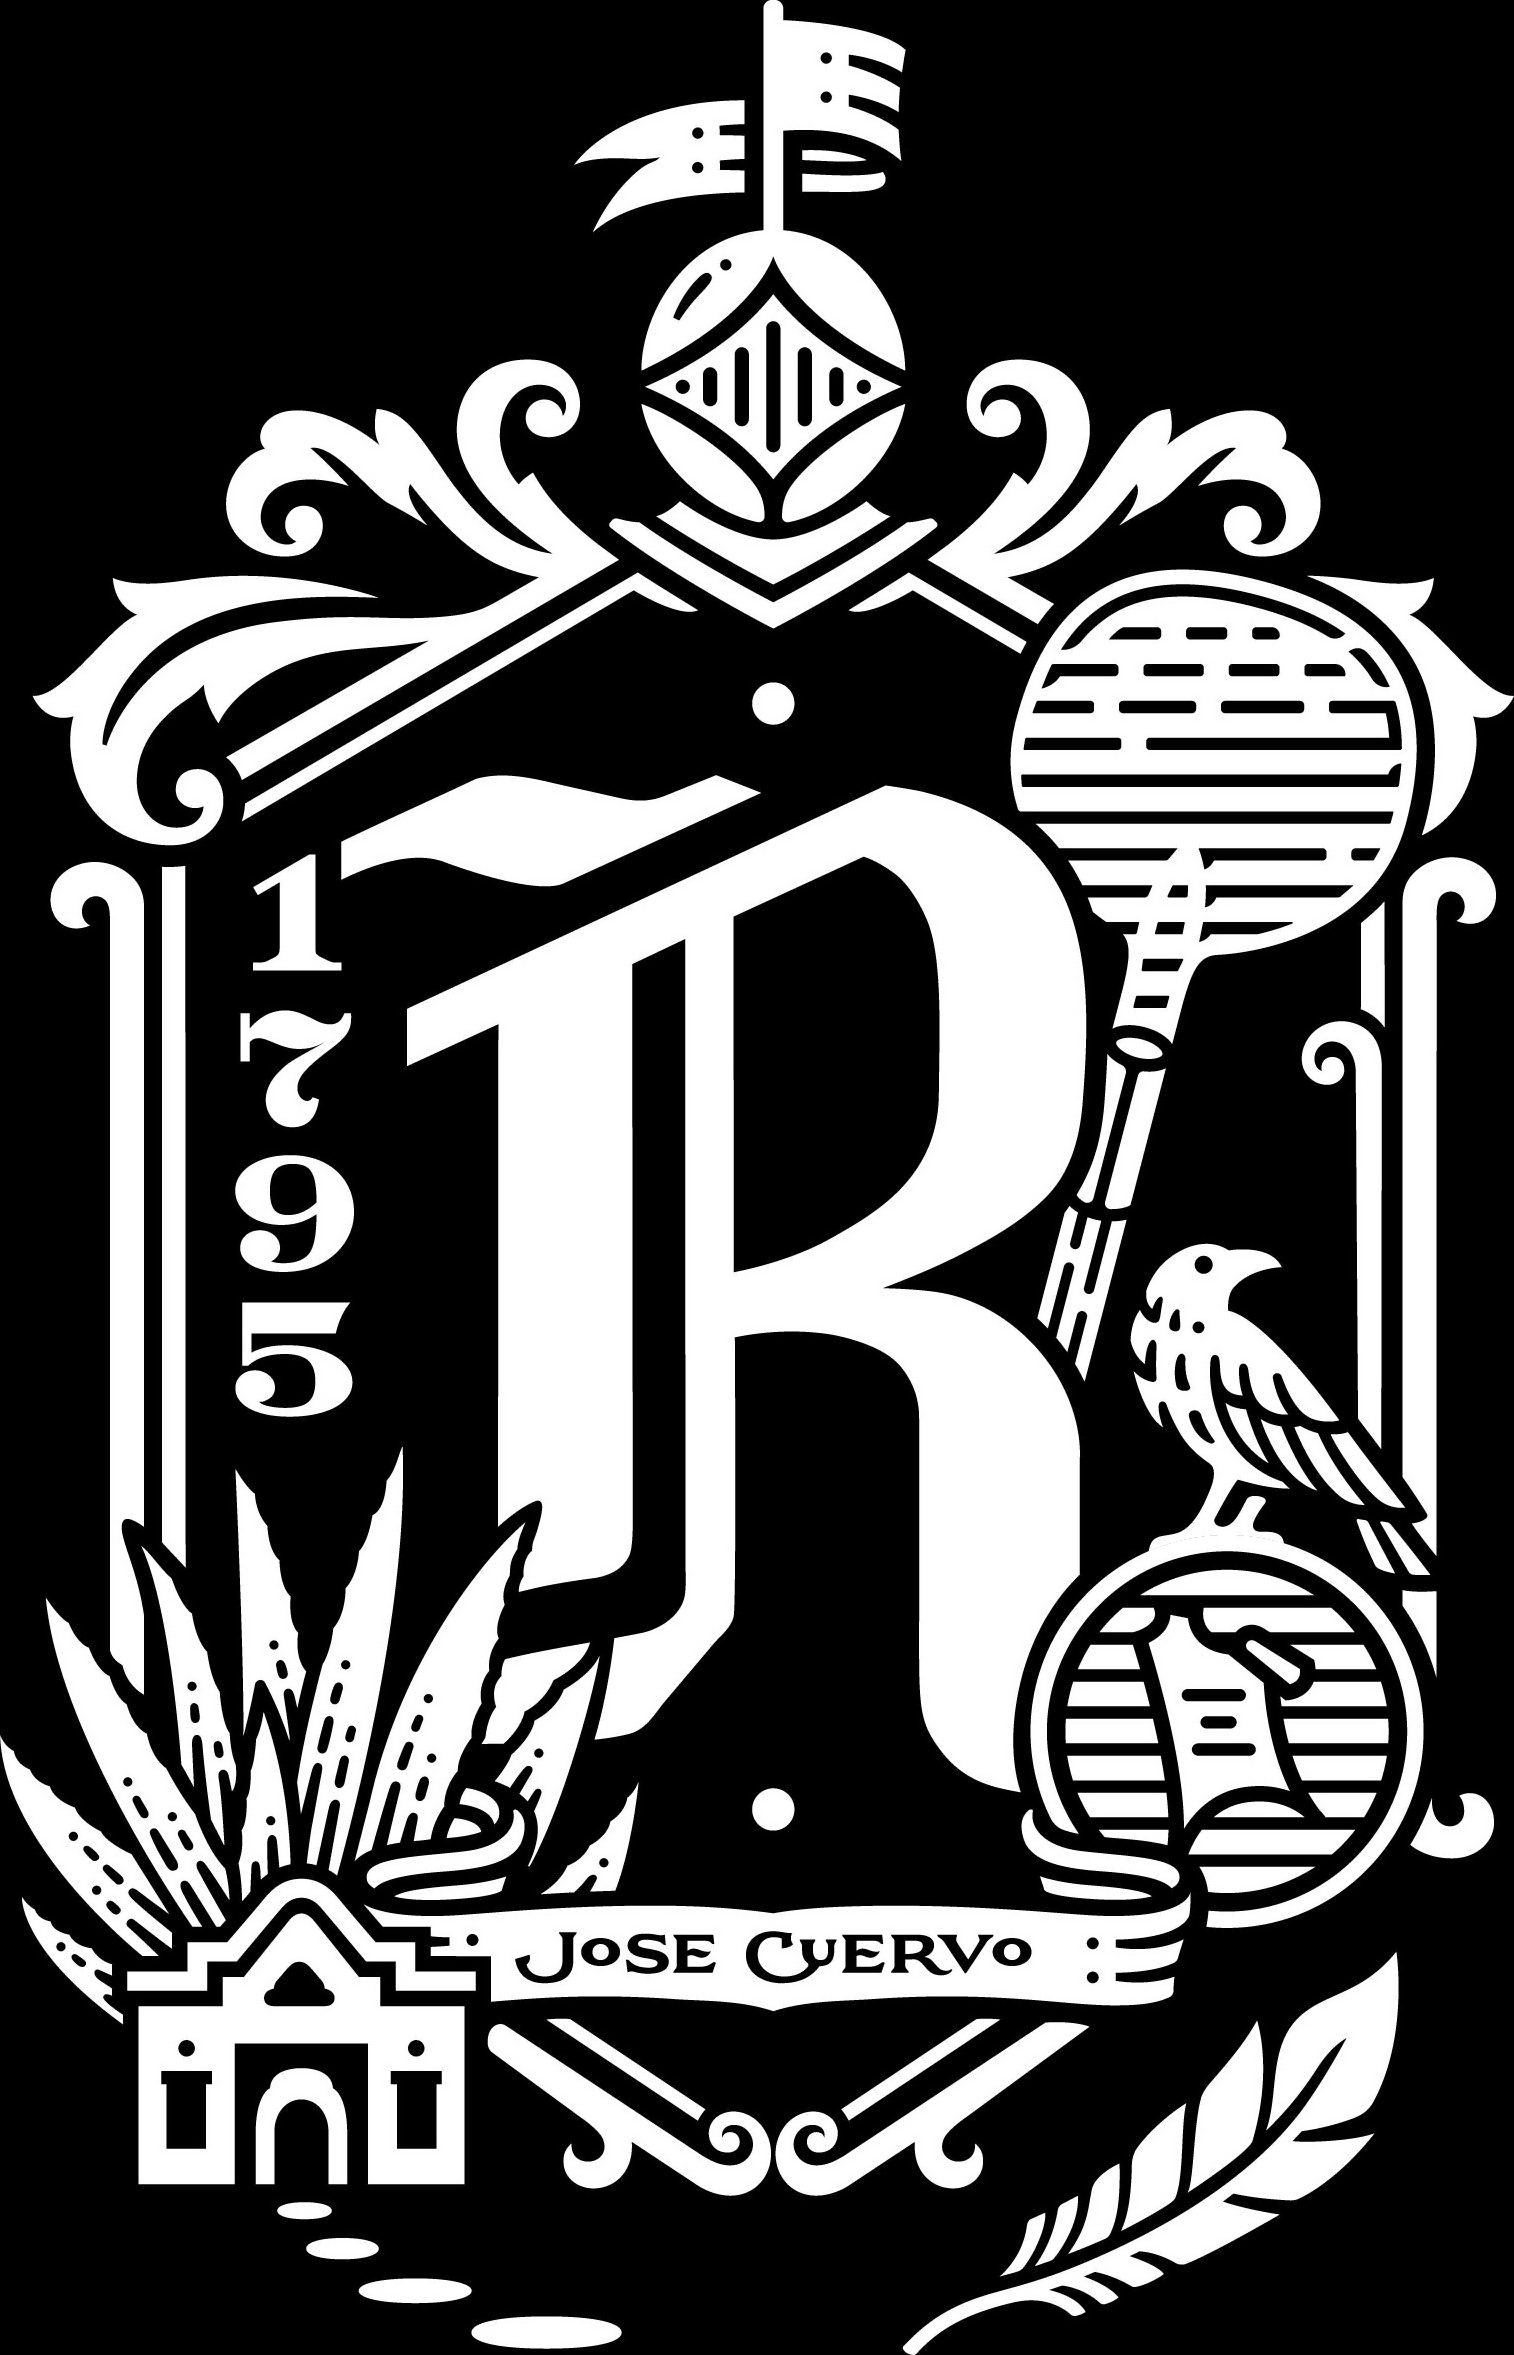 Trademark Logo "JOSE CUERVO" "1795" "R"